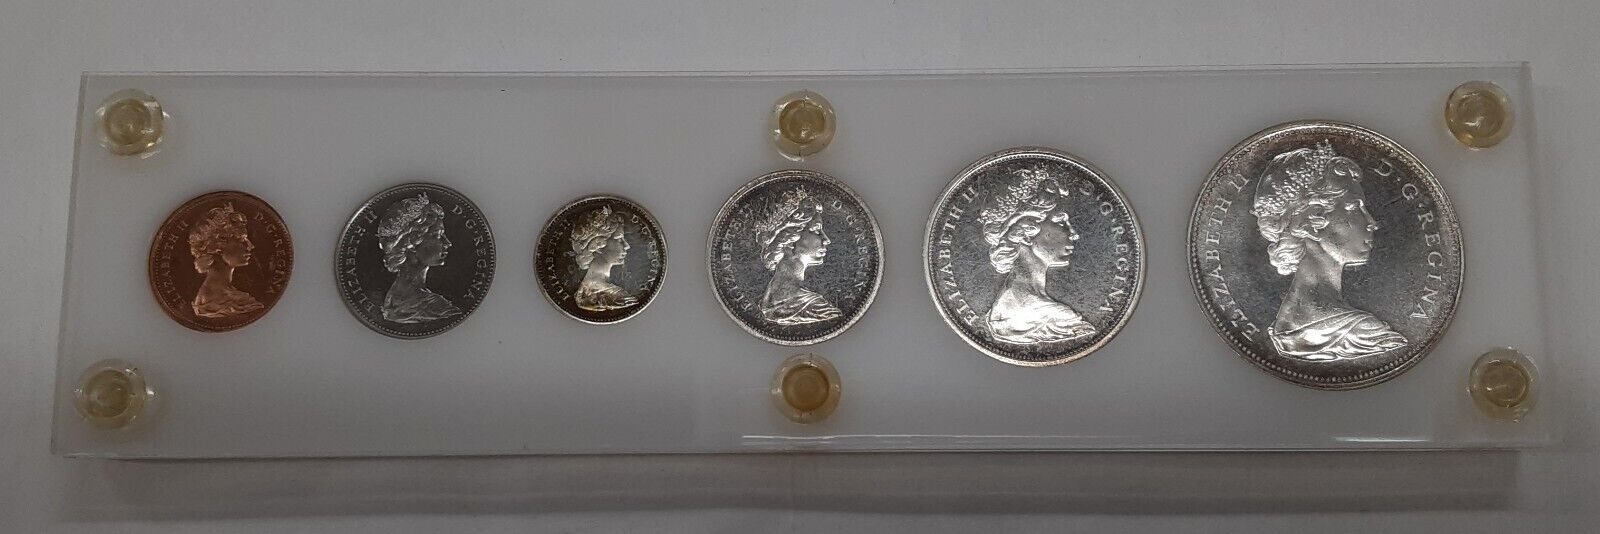 1966 Canada 6 Coin Mint Set Queen Elizabeth II BU in White Acrylic Holder